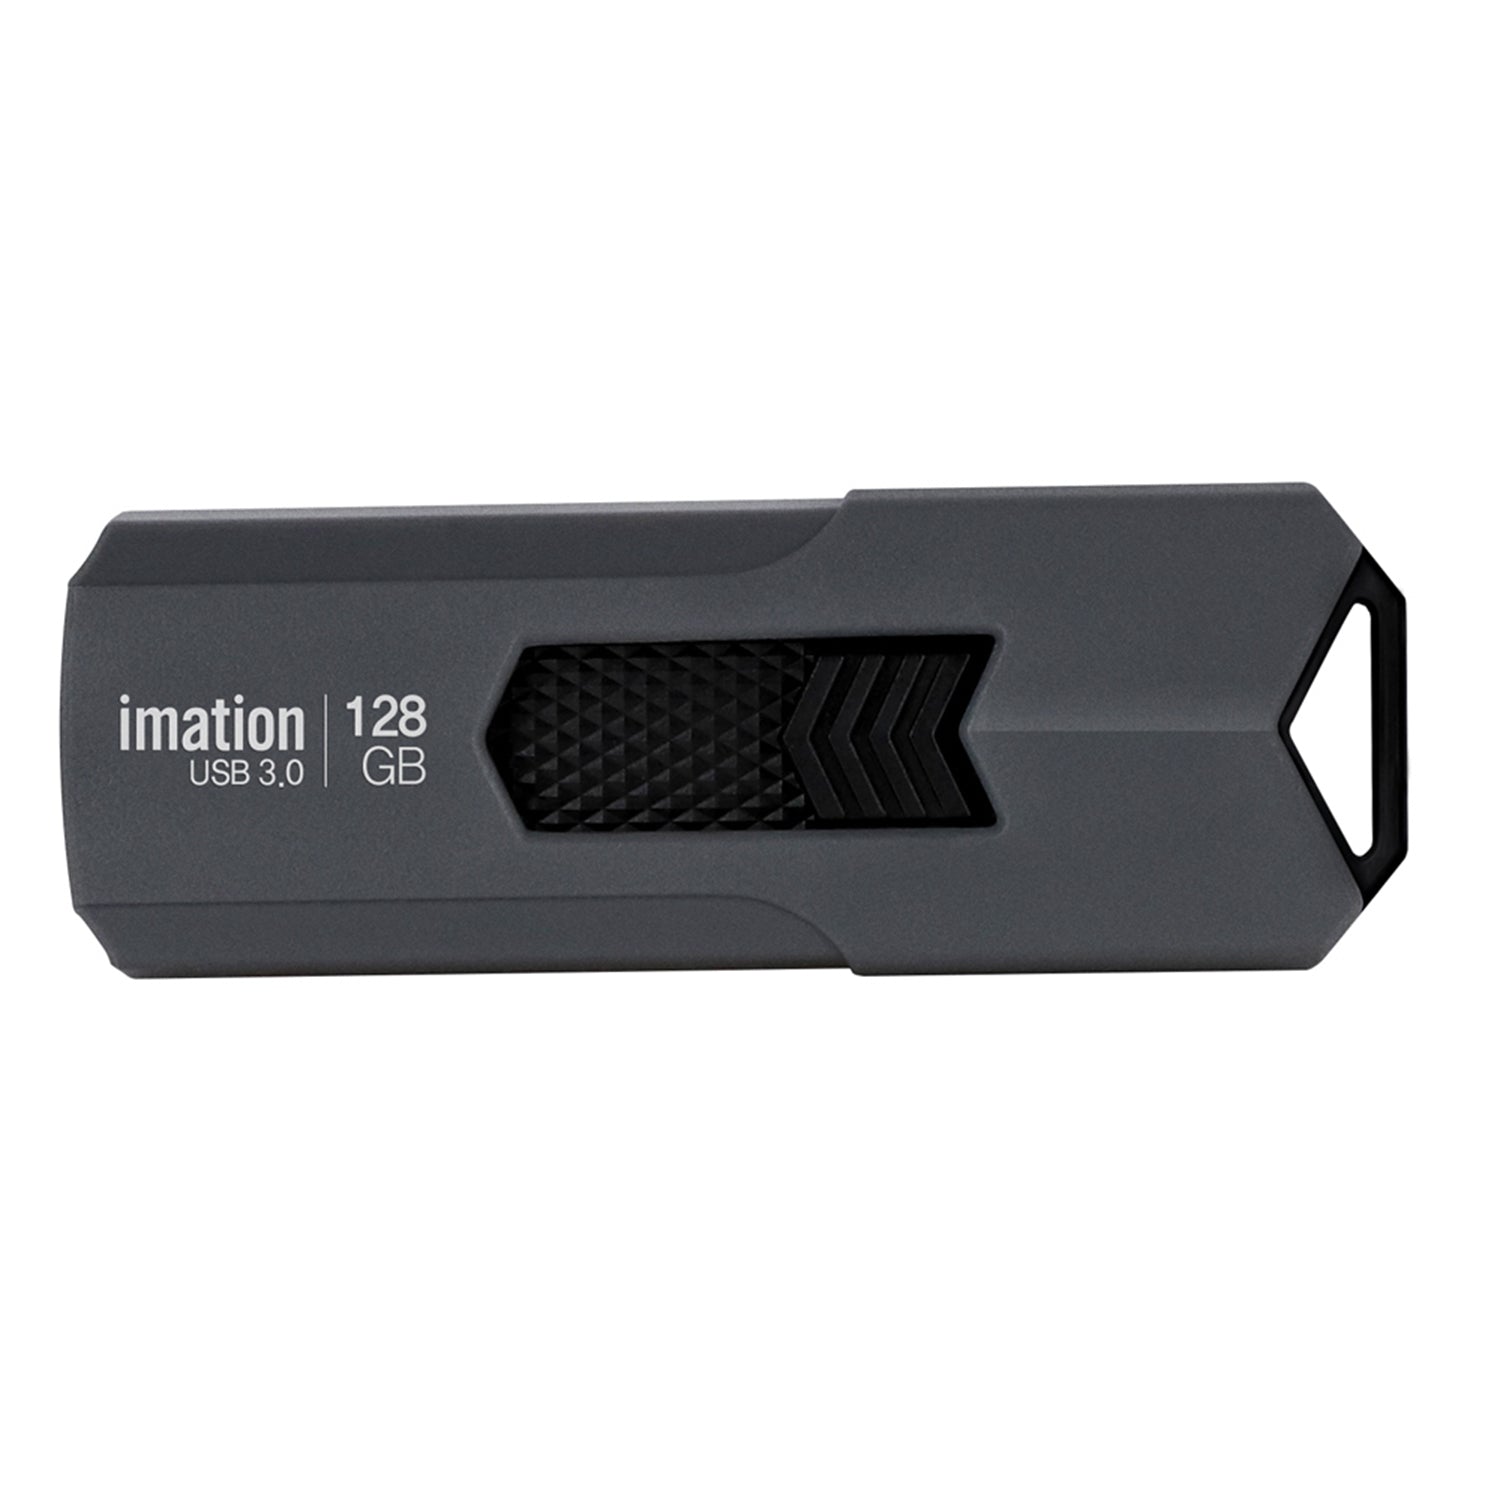 Imation USB 3.0 Drive